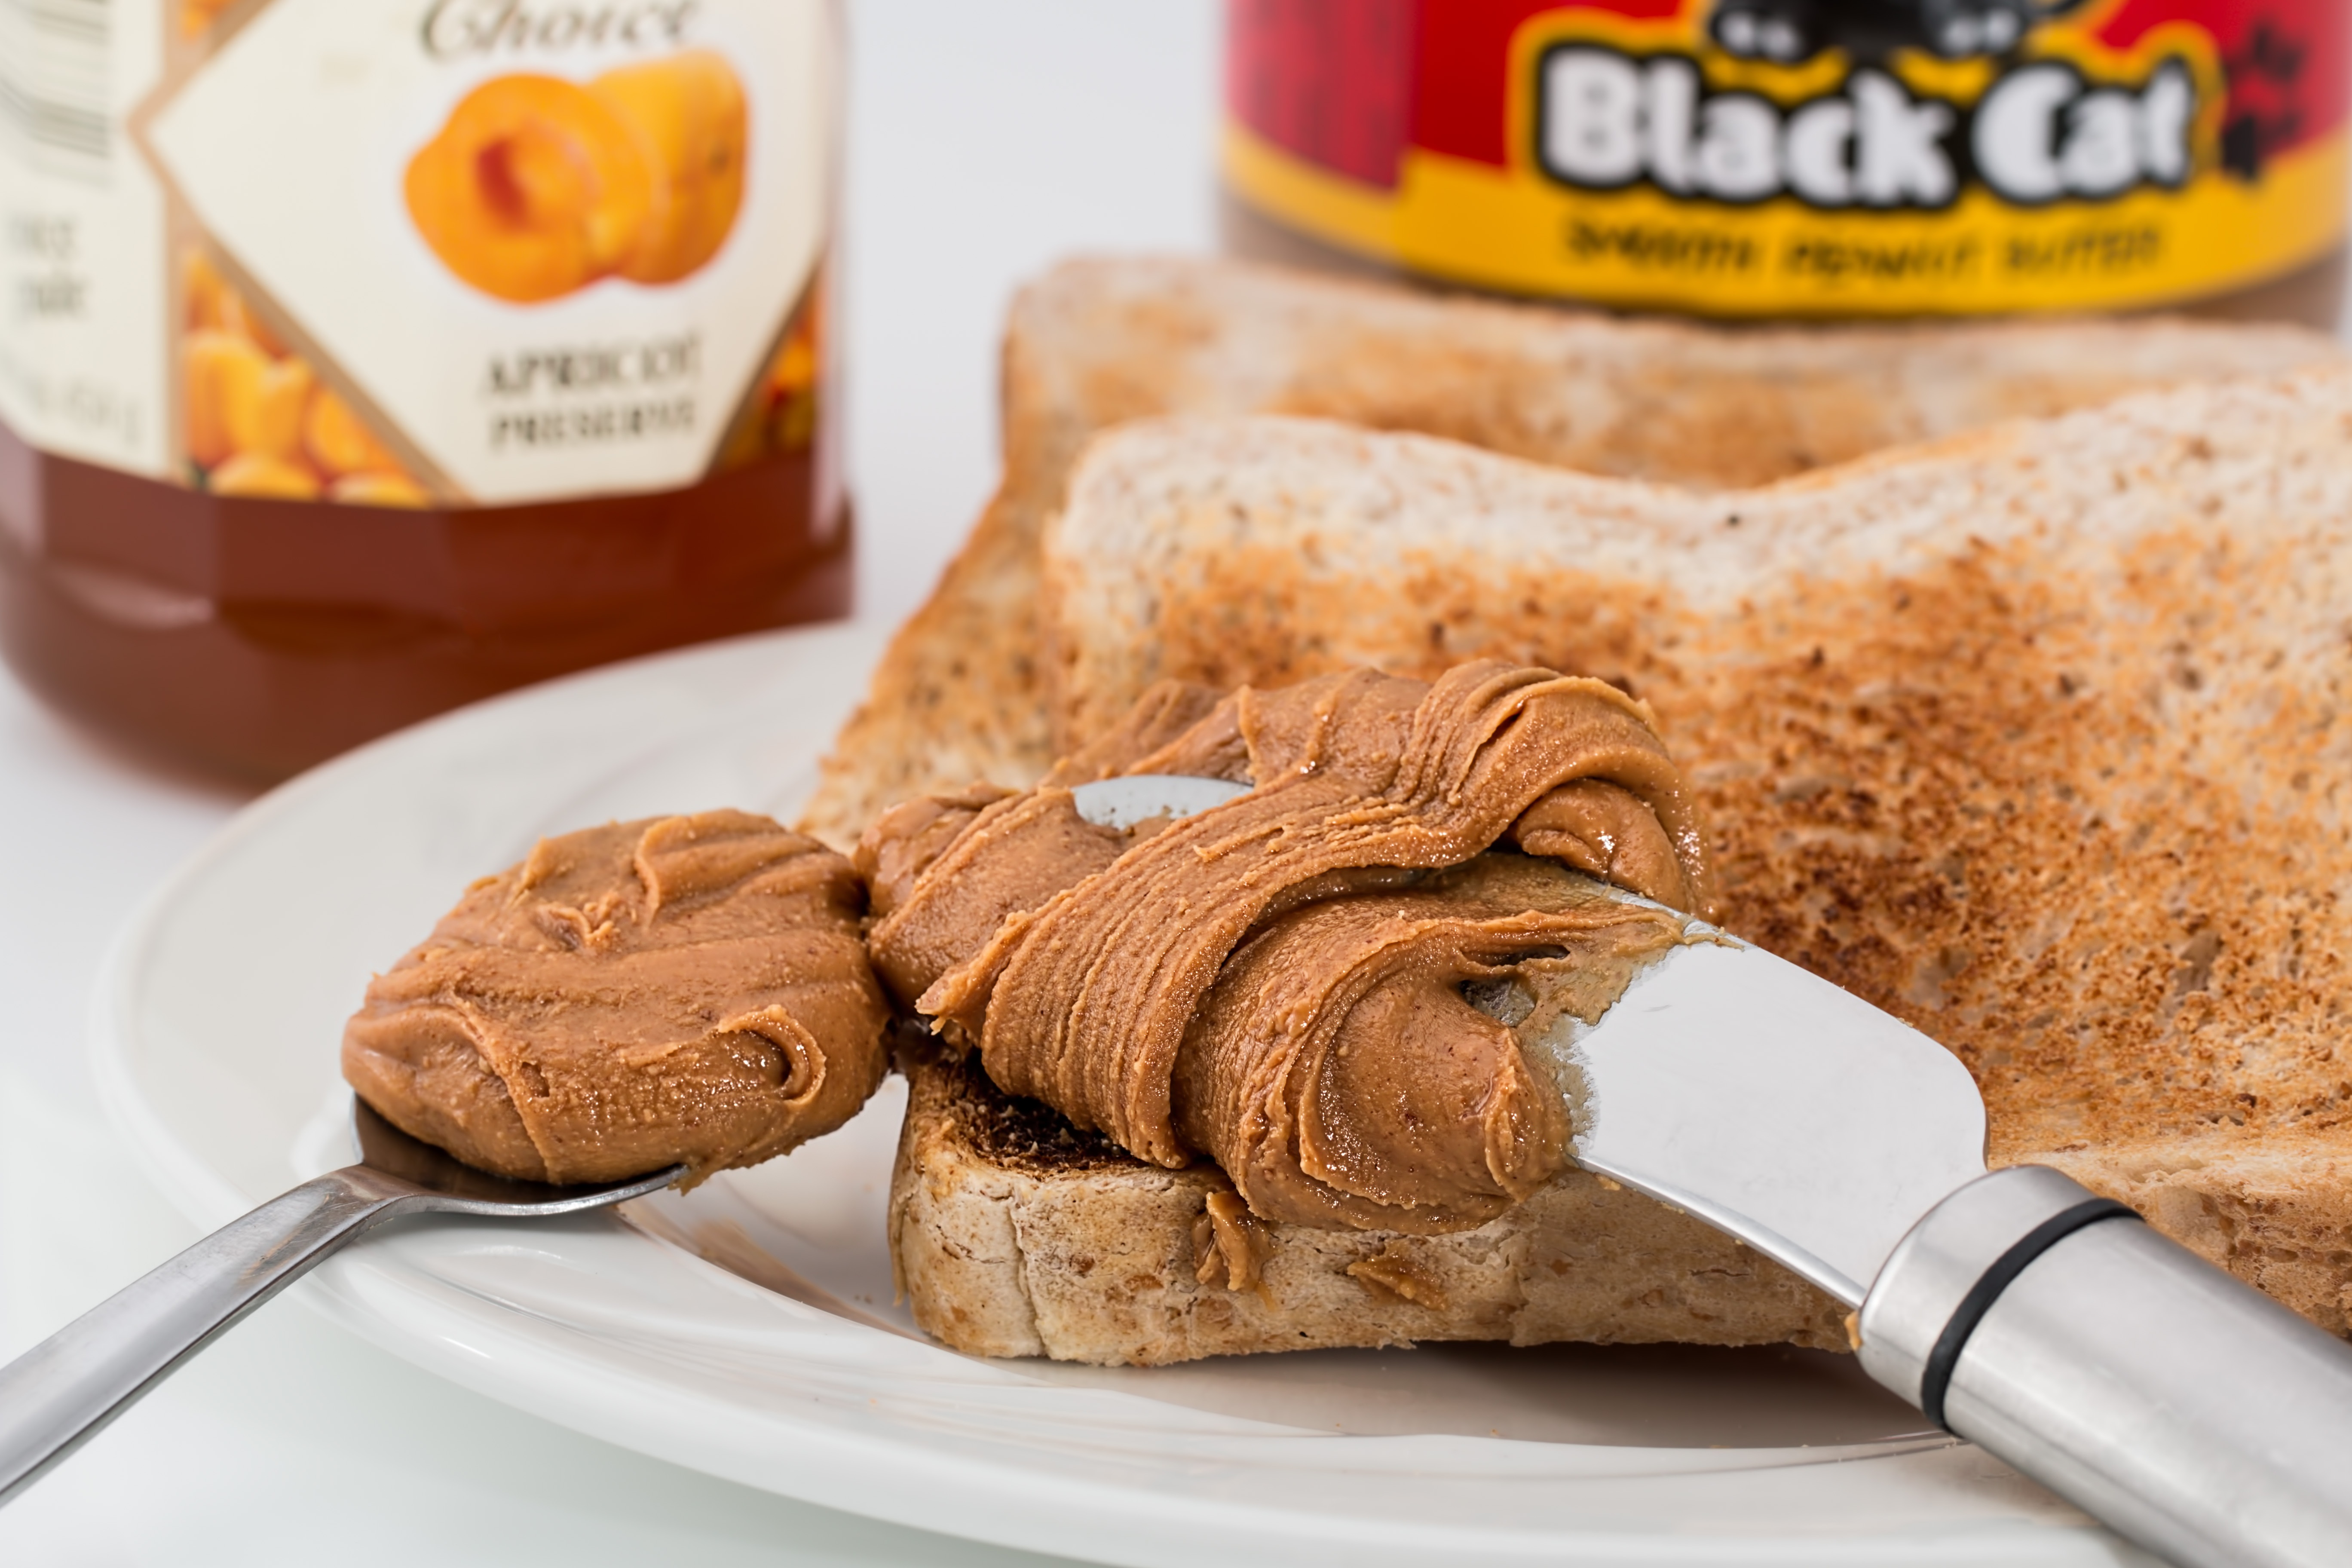 Peanut butter photo